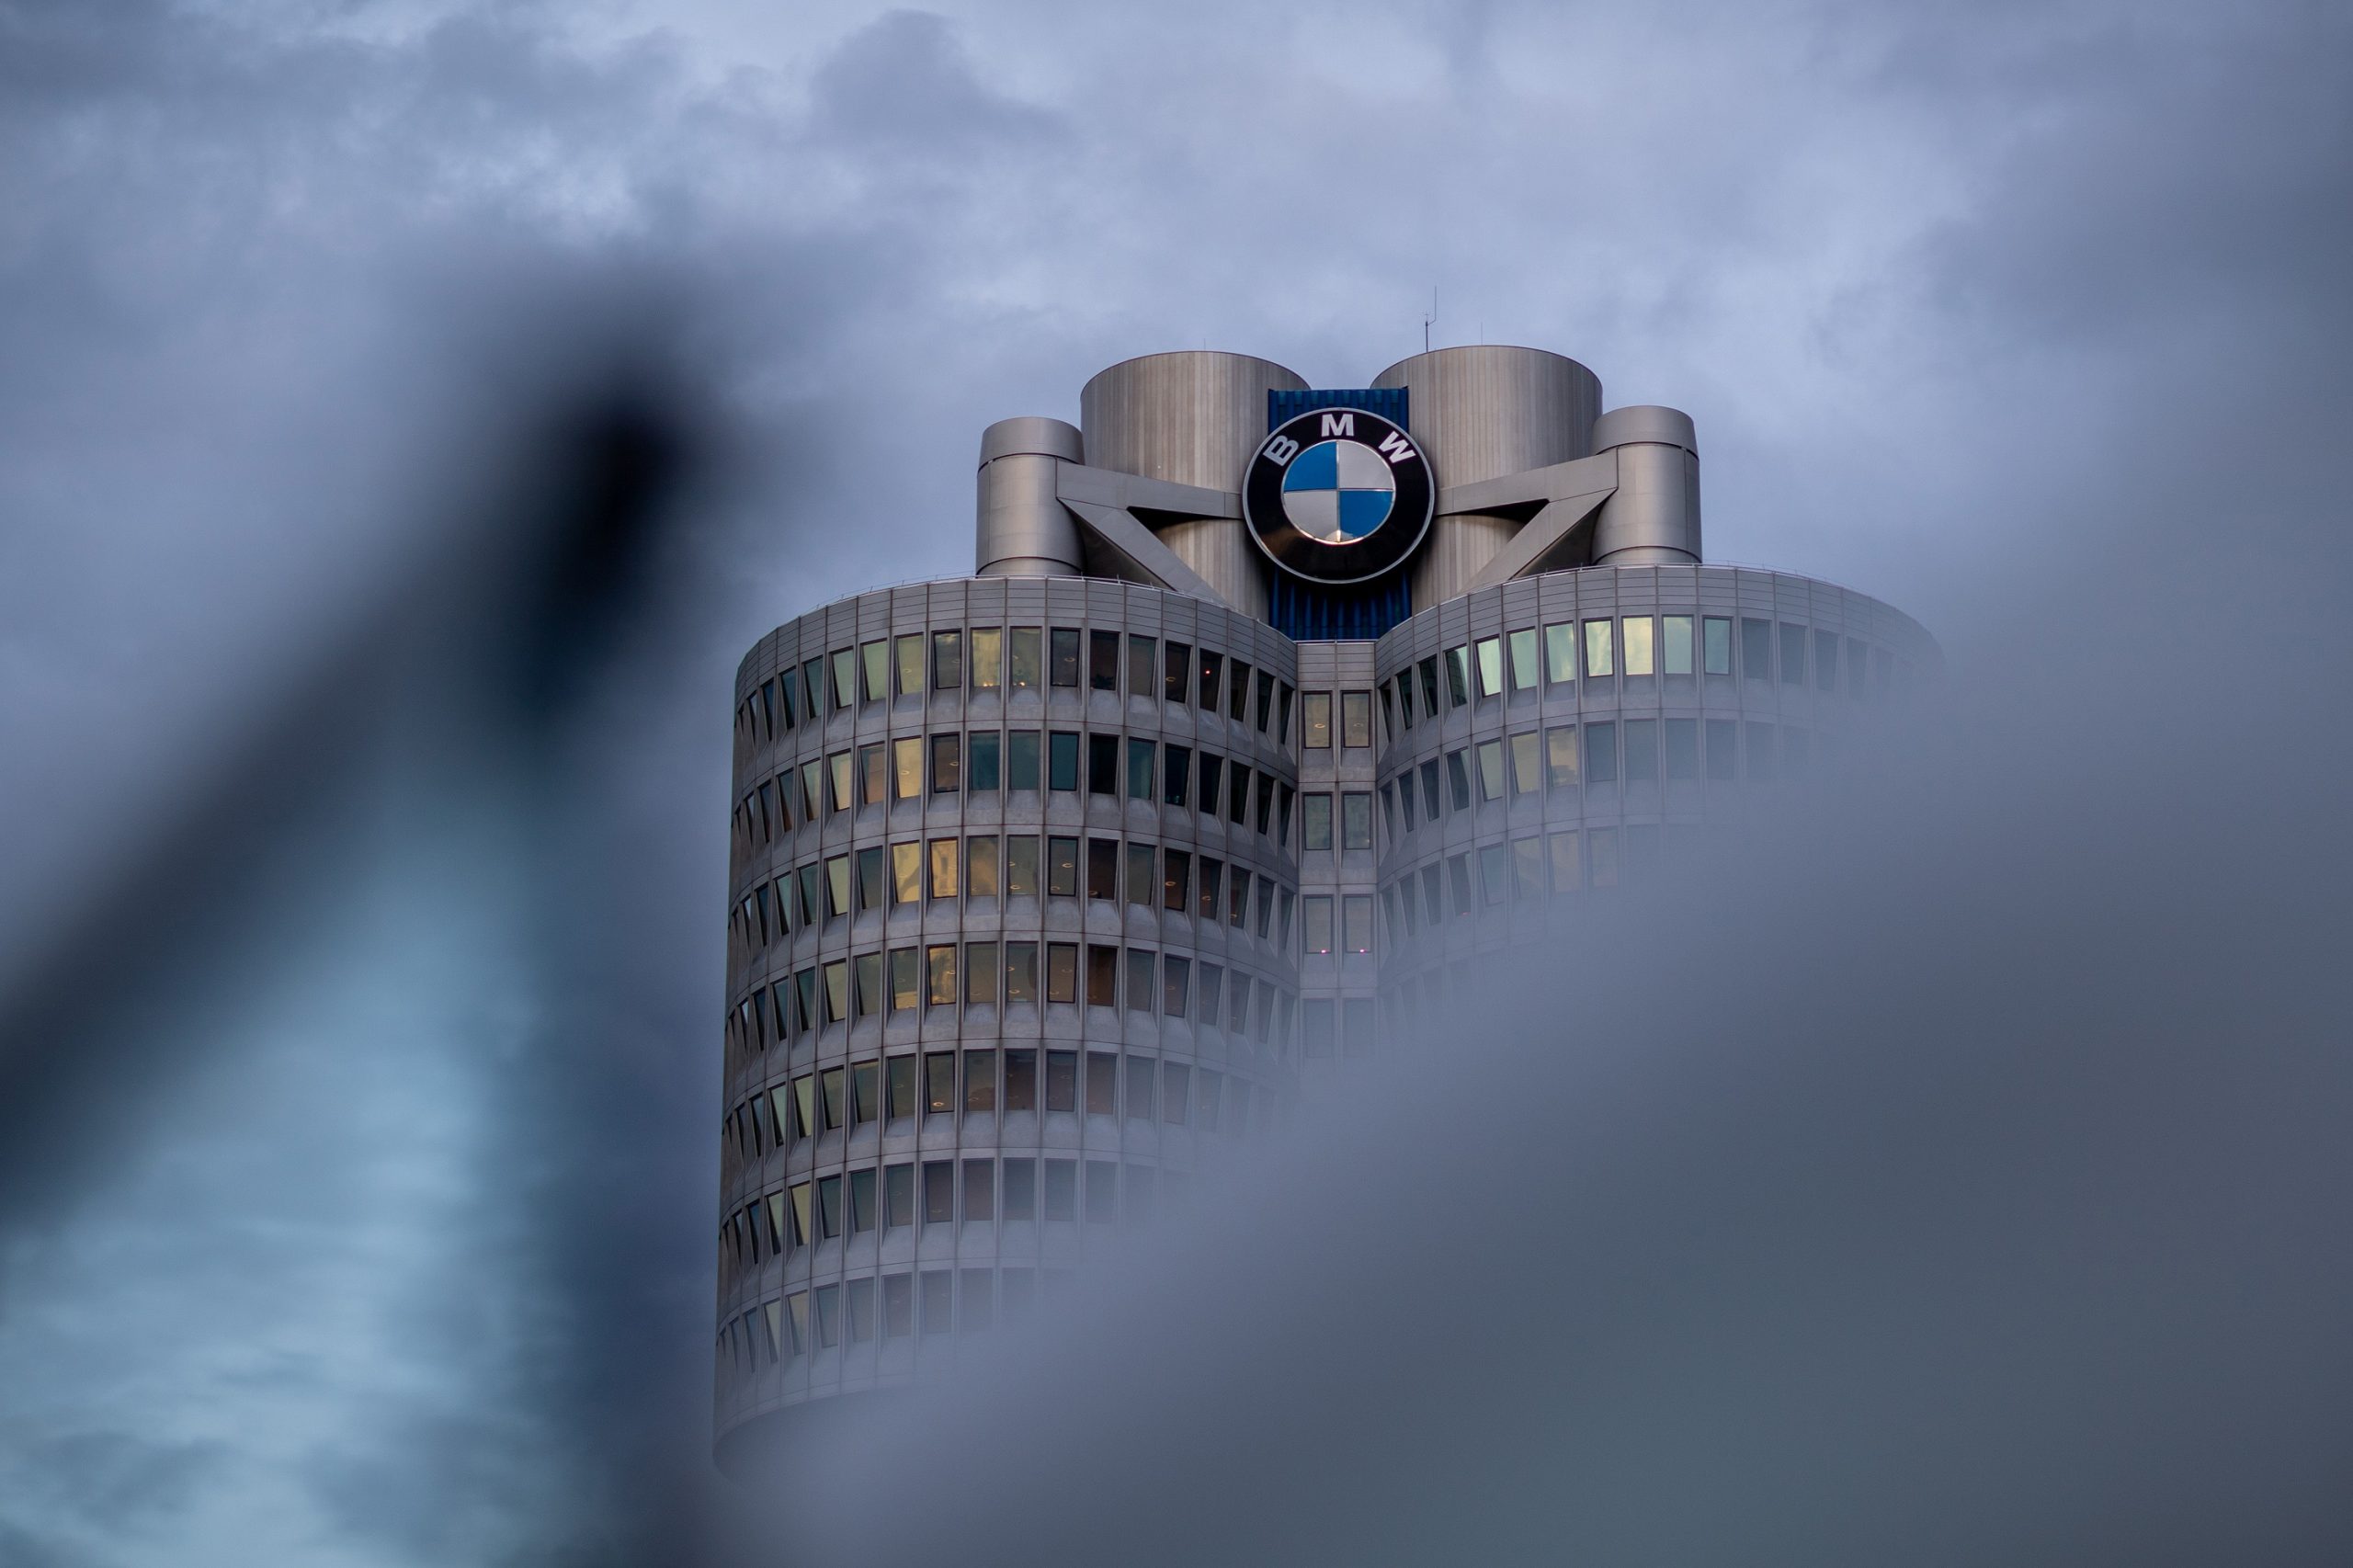 The BMW Corporate HQ in Munich, Germany